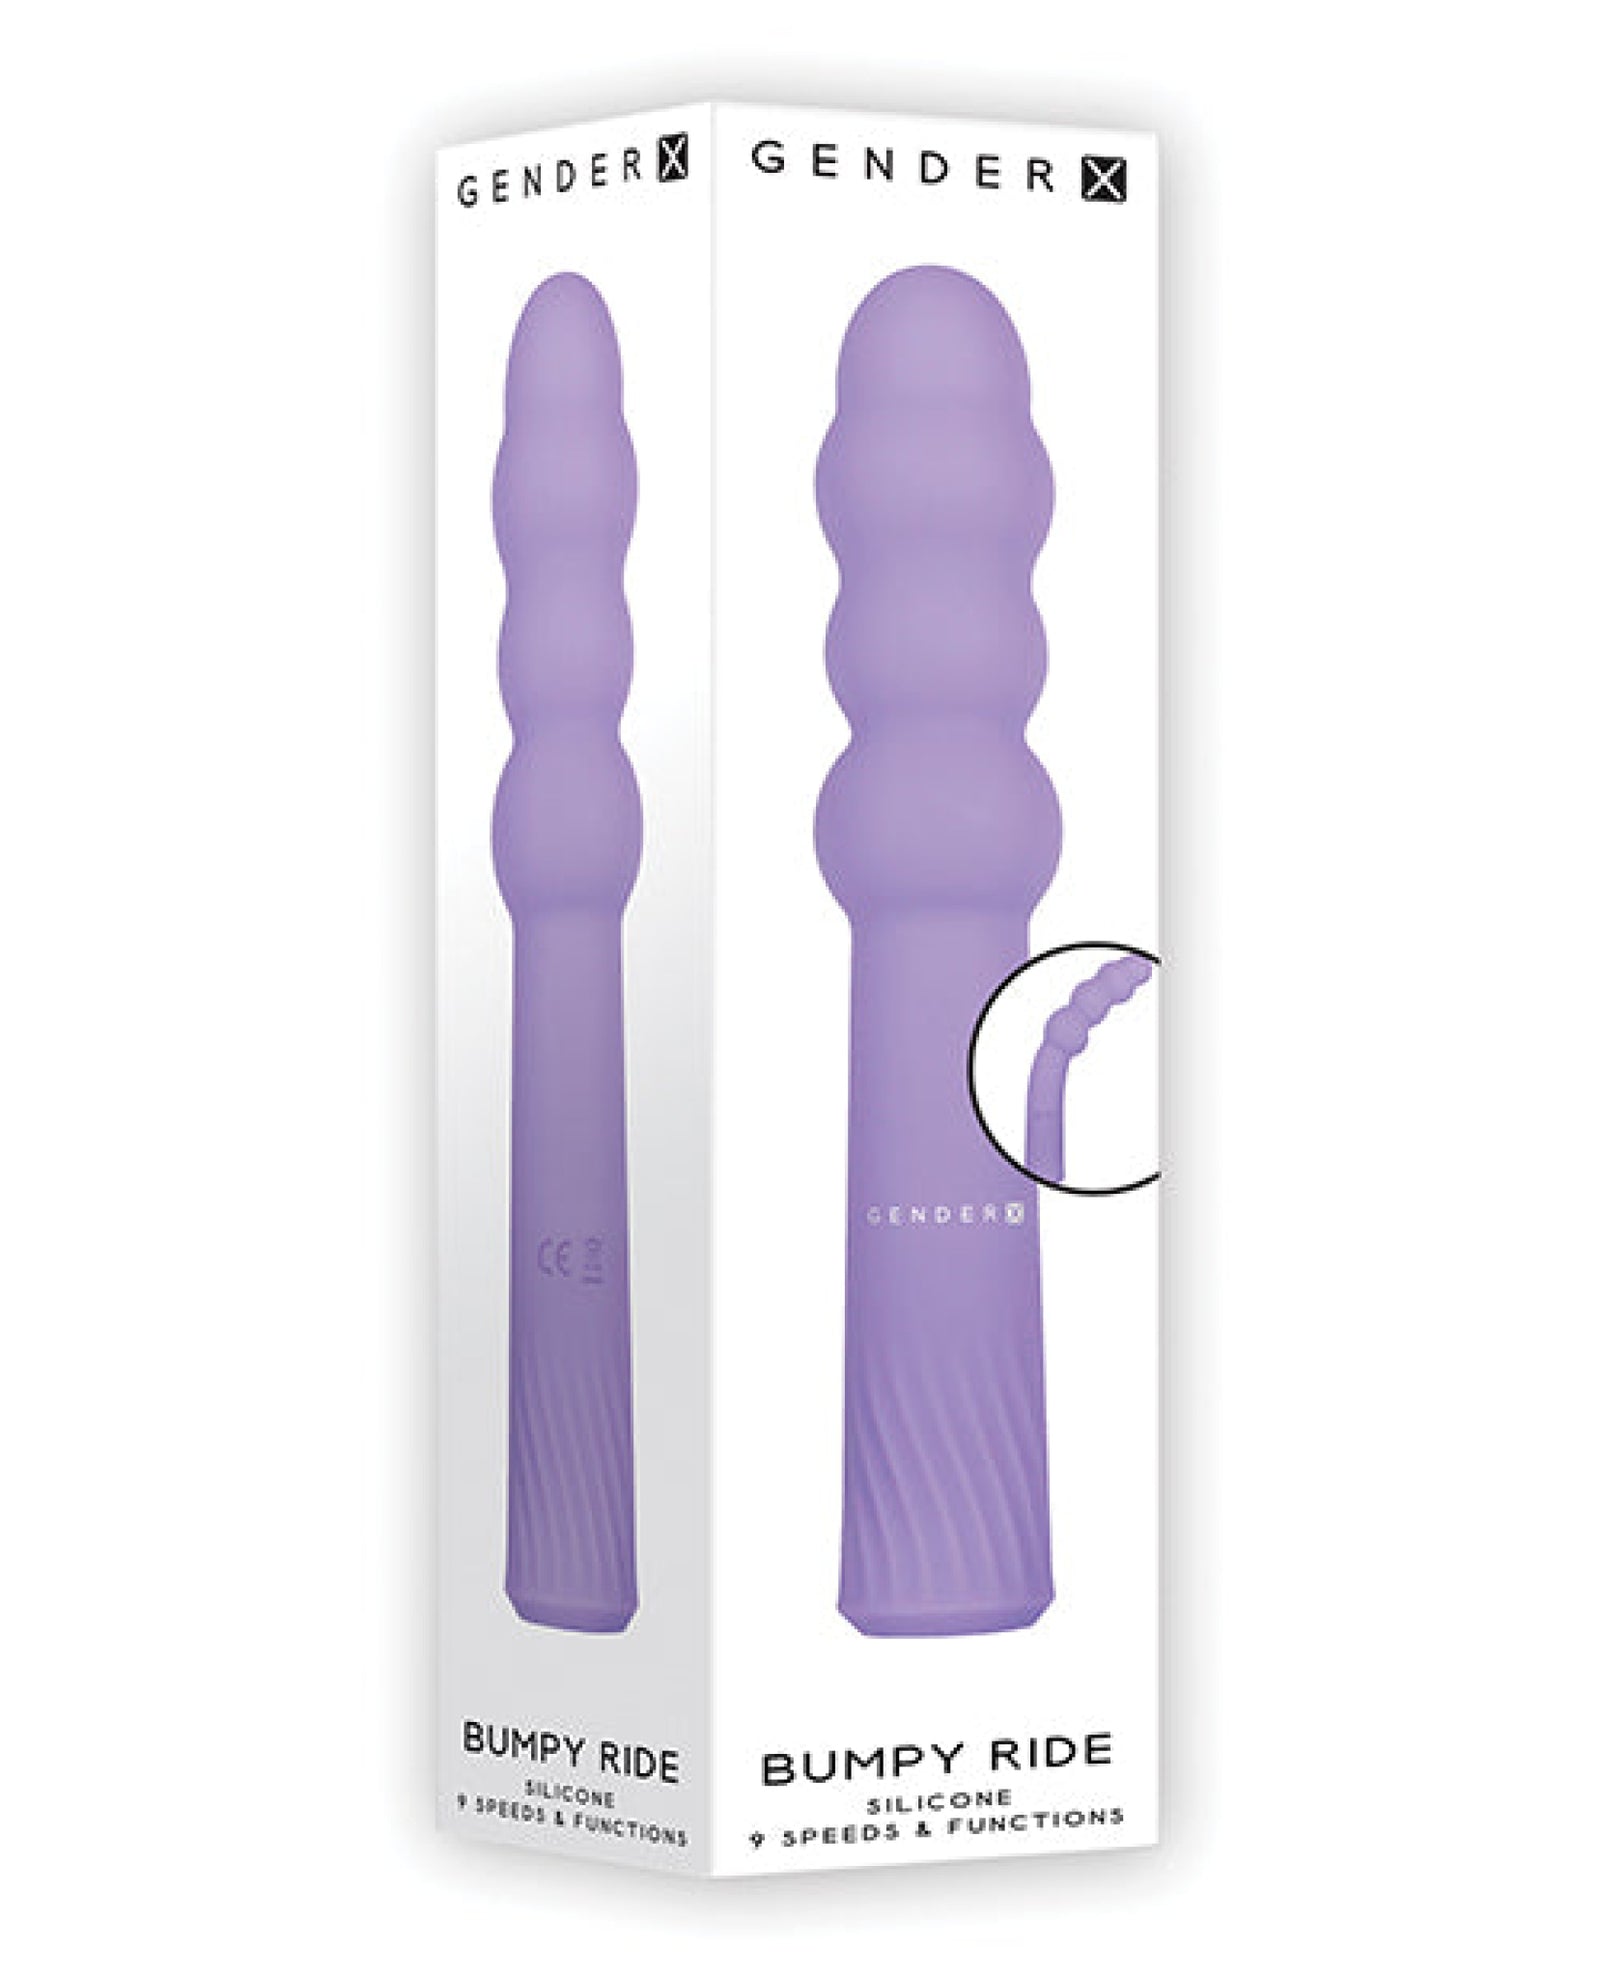 Gender X Bumpy Ride - Purple Gender X